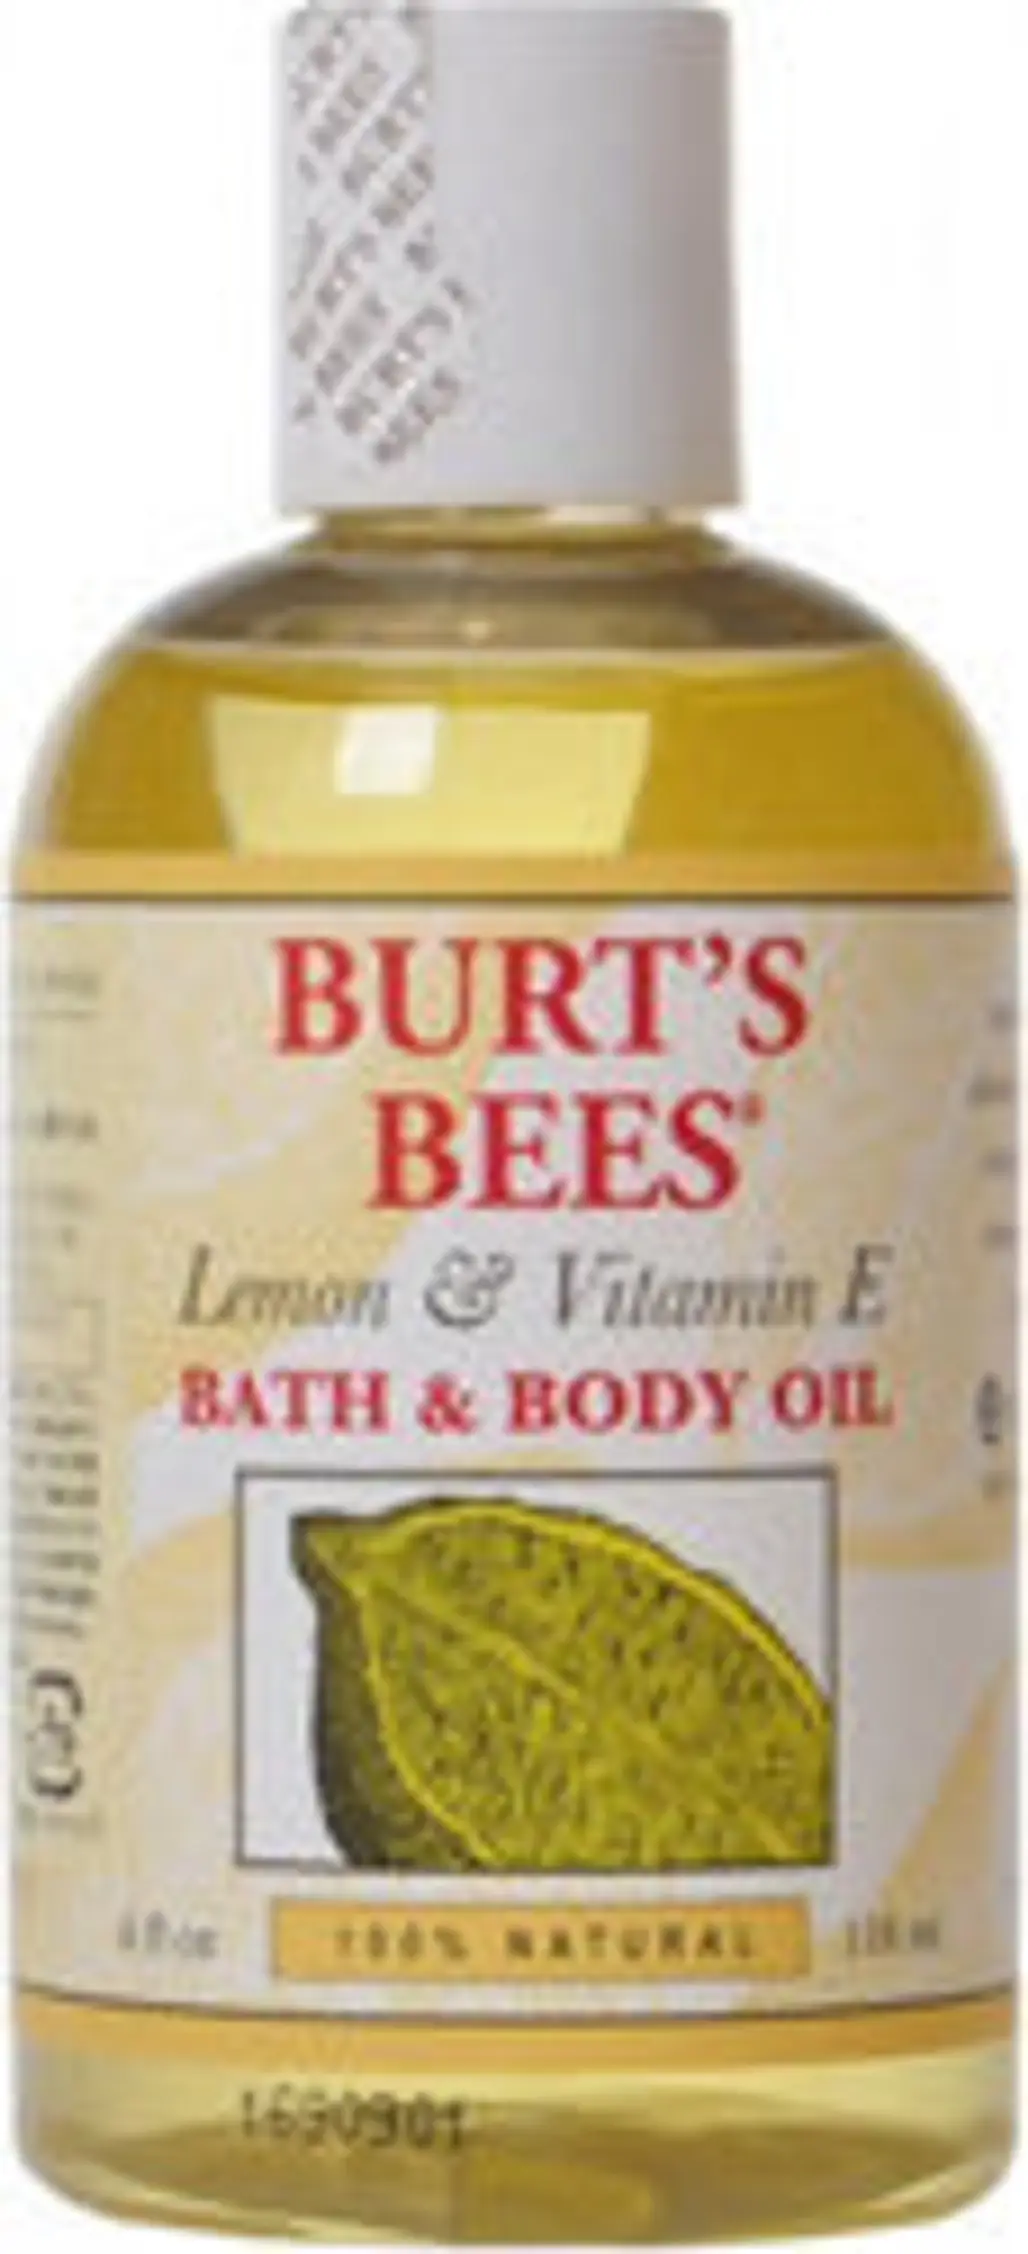 Burt’s Bees Lemon and Vitamin E Bath and Body Oil